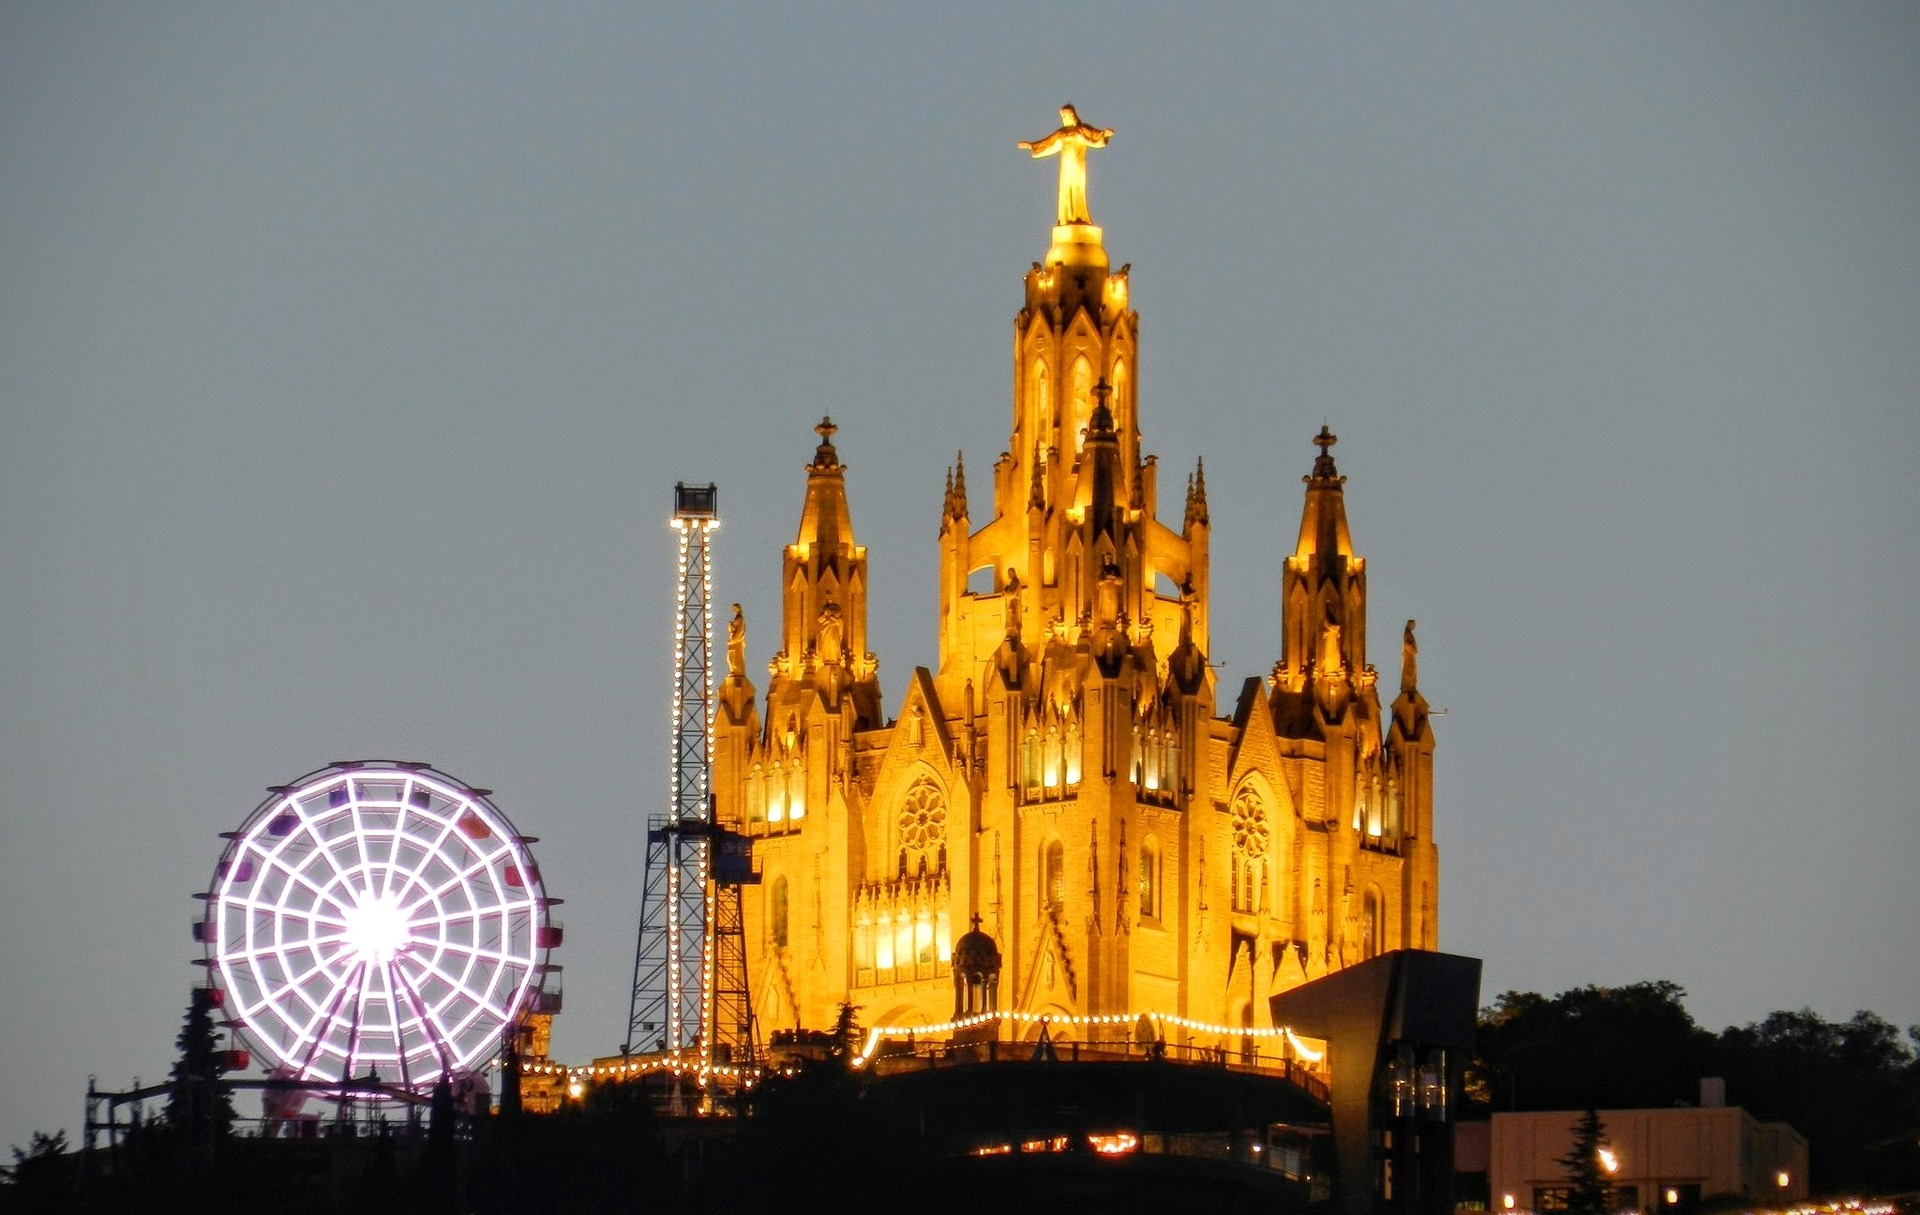 Tibidabo Amusement park Cathedral